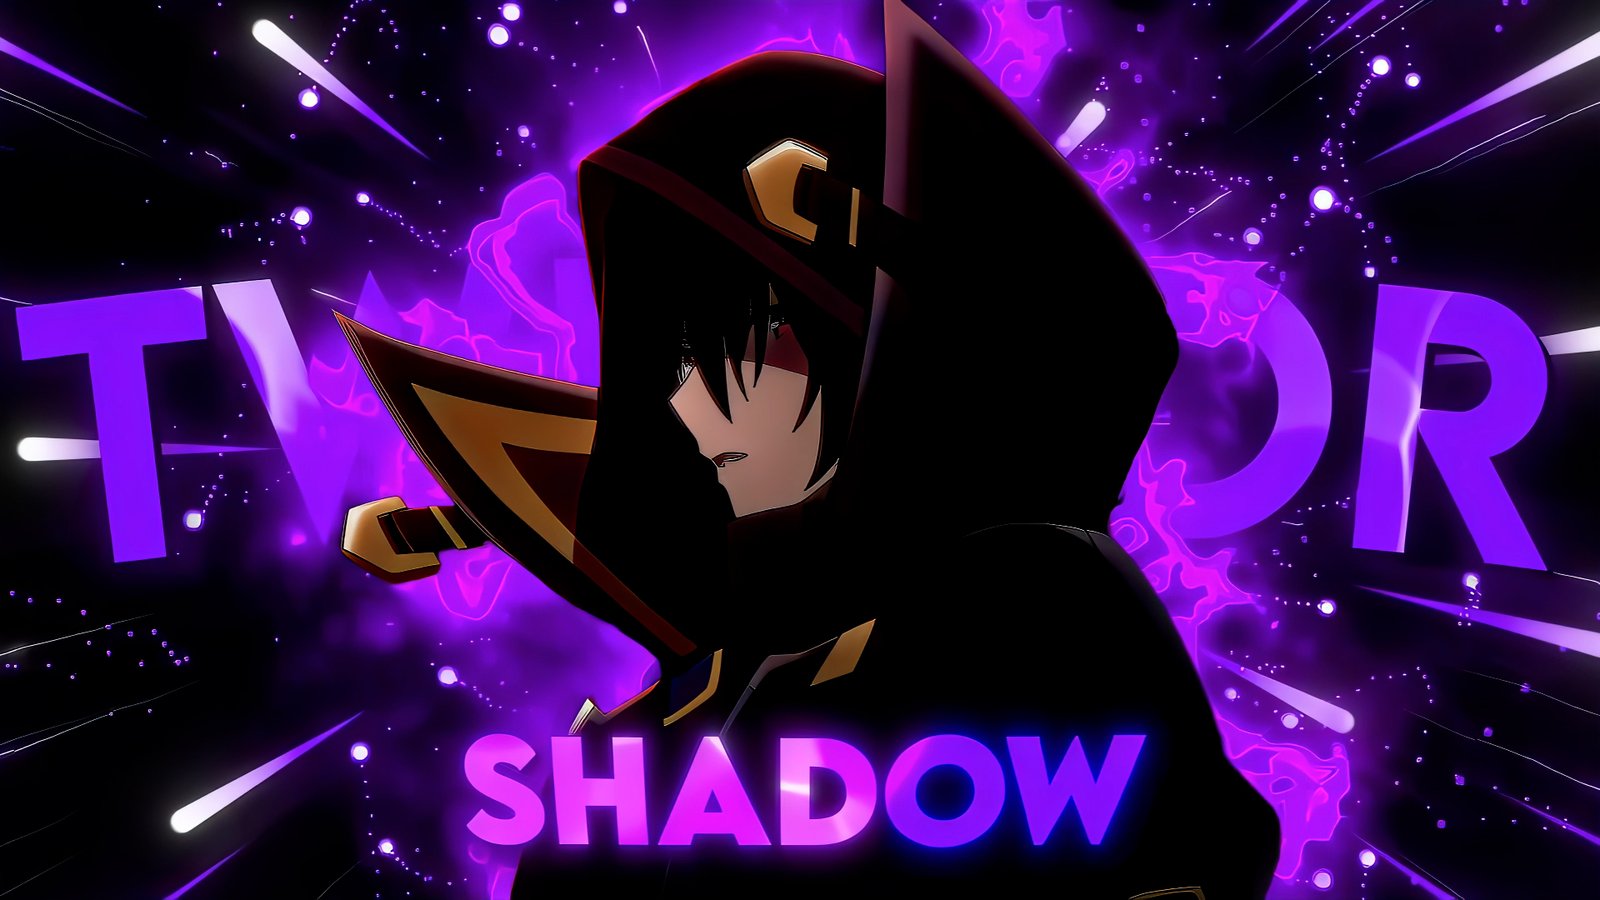 Cid Kagenou/Shadow Twixtor